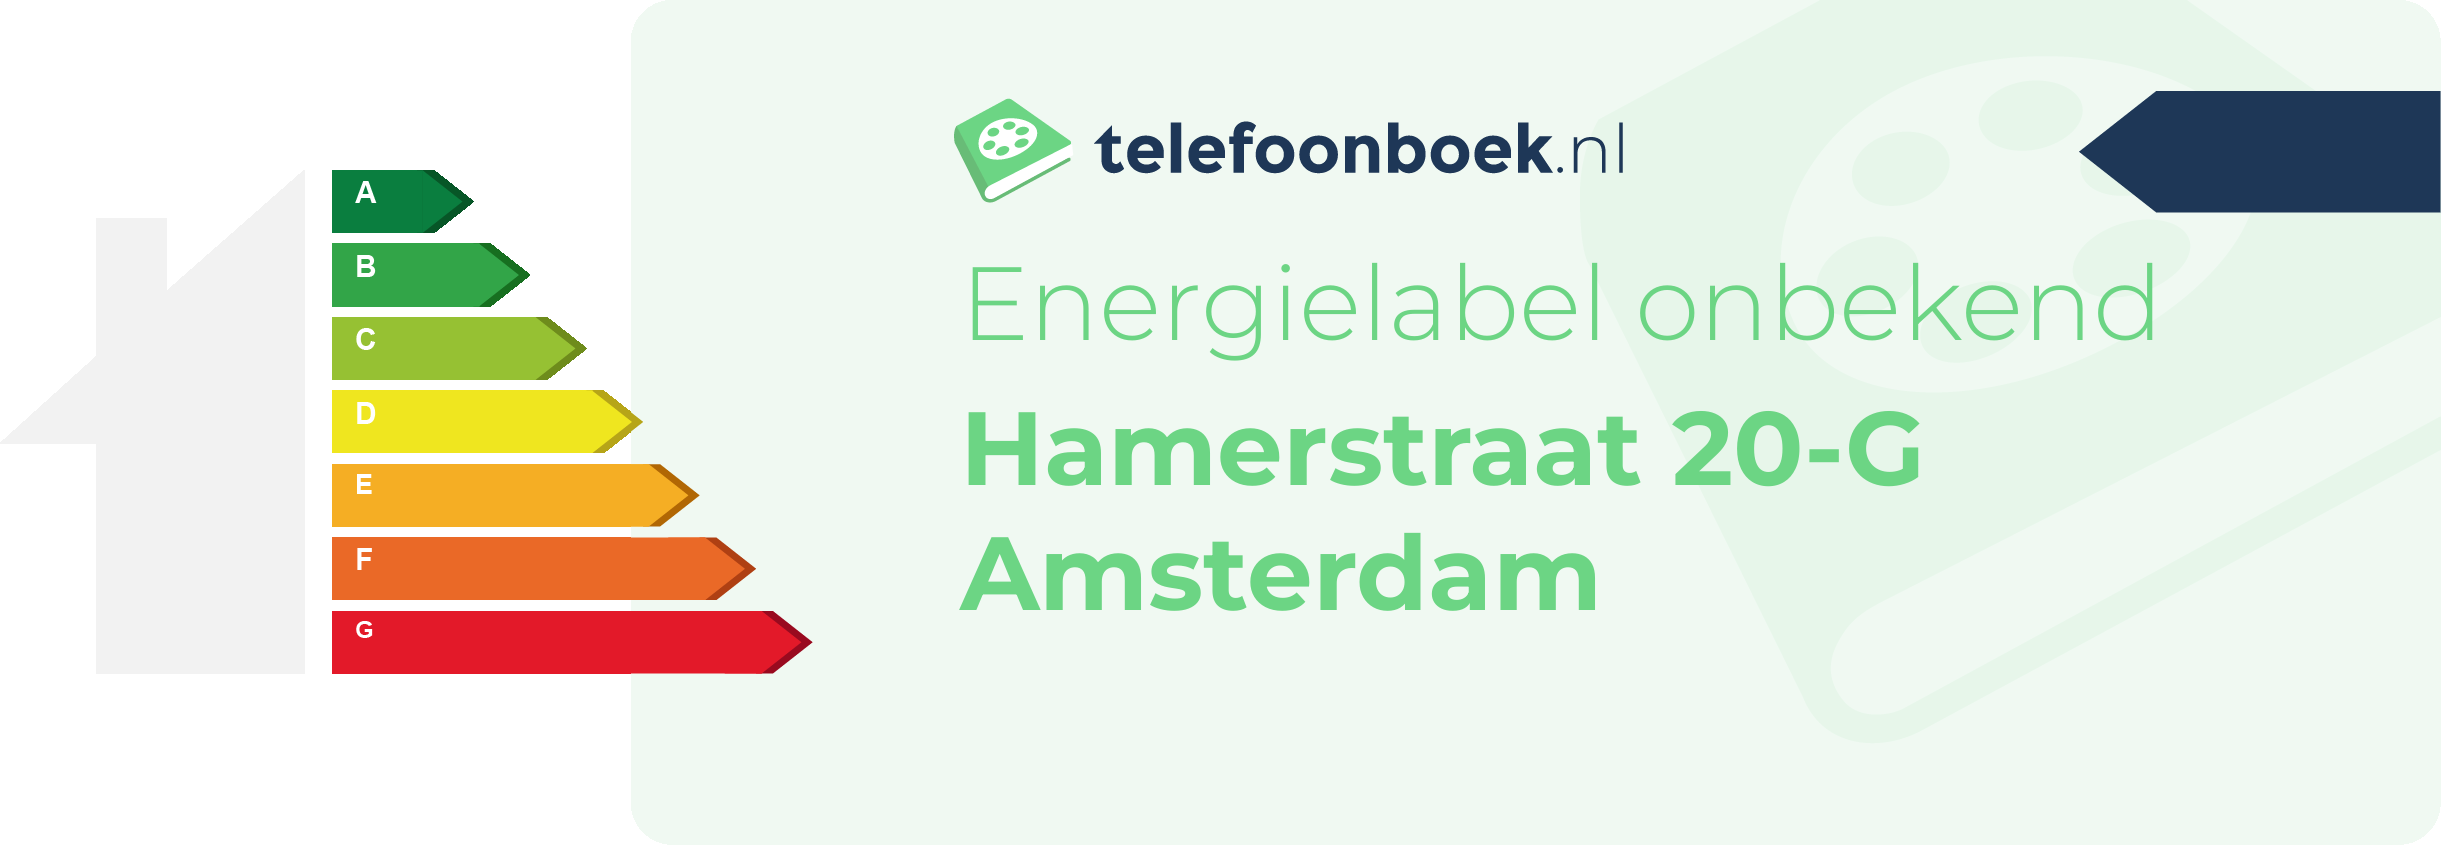 Energielabel Hamerstraat 20-G Amsterdam